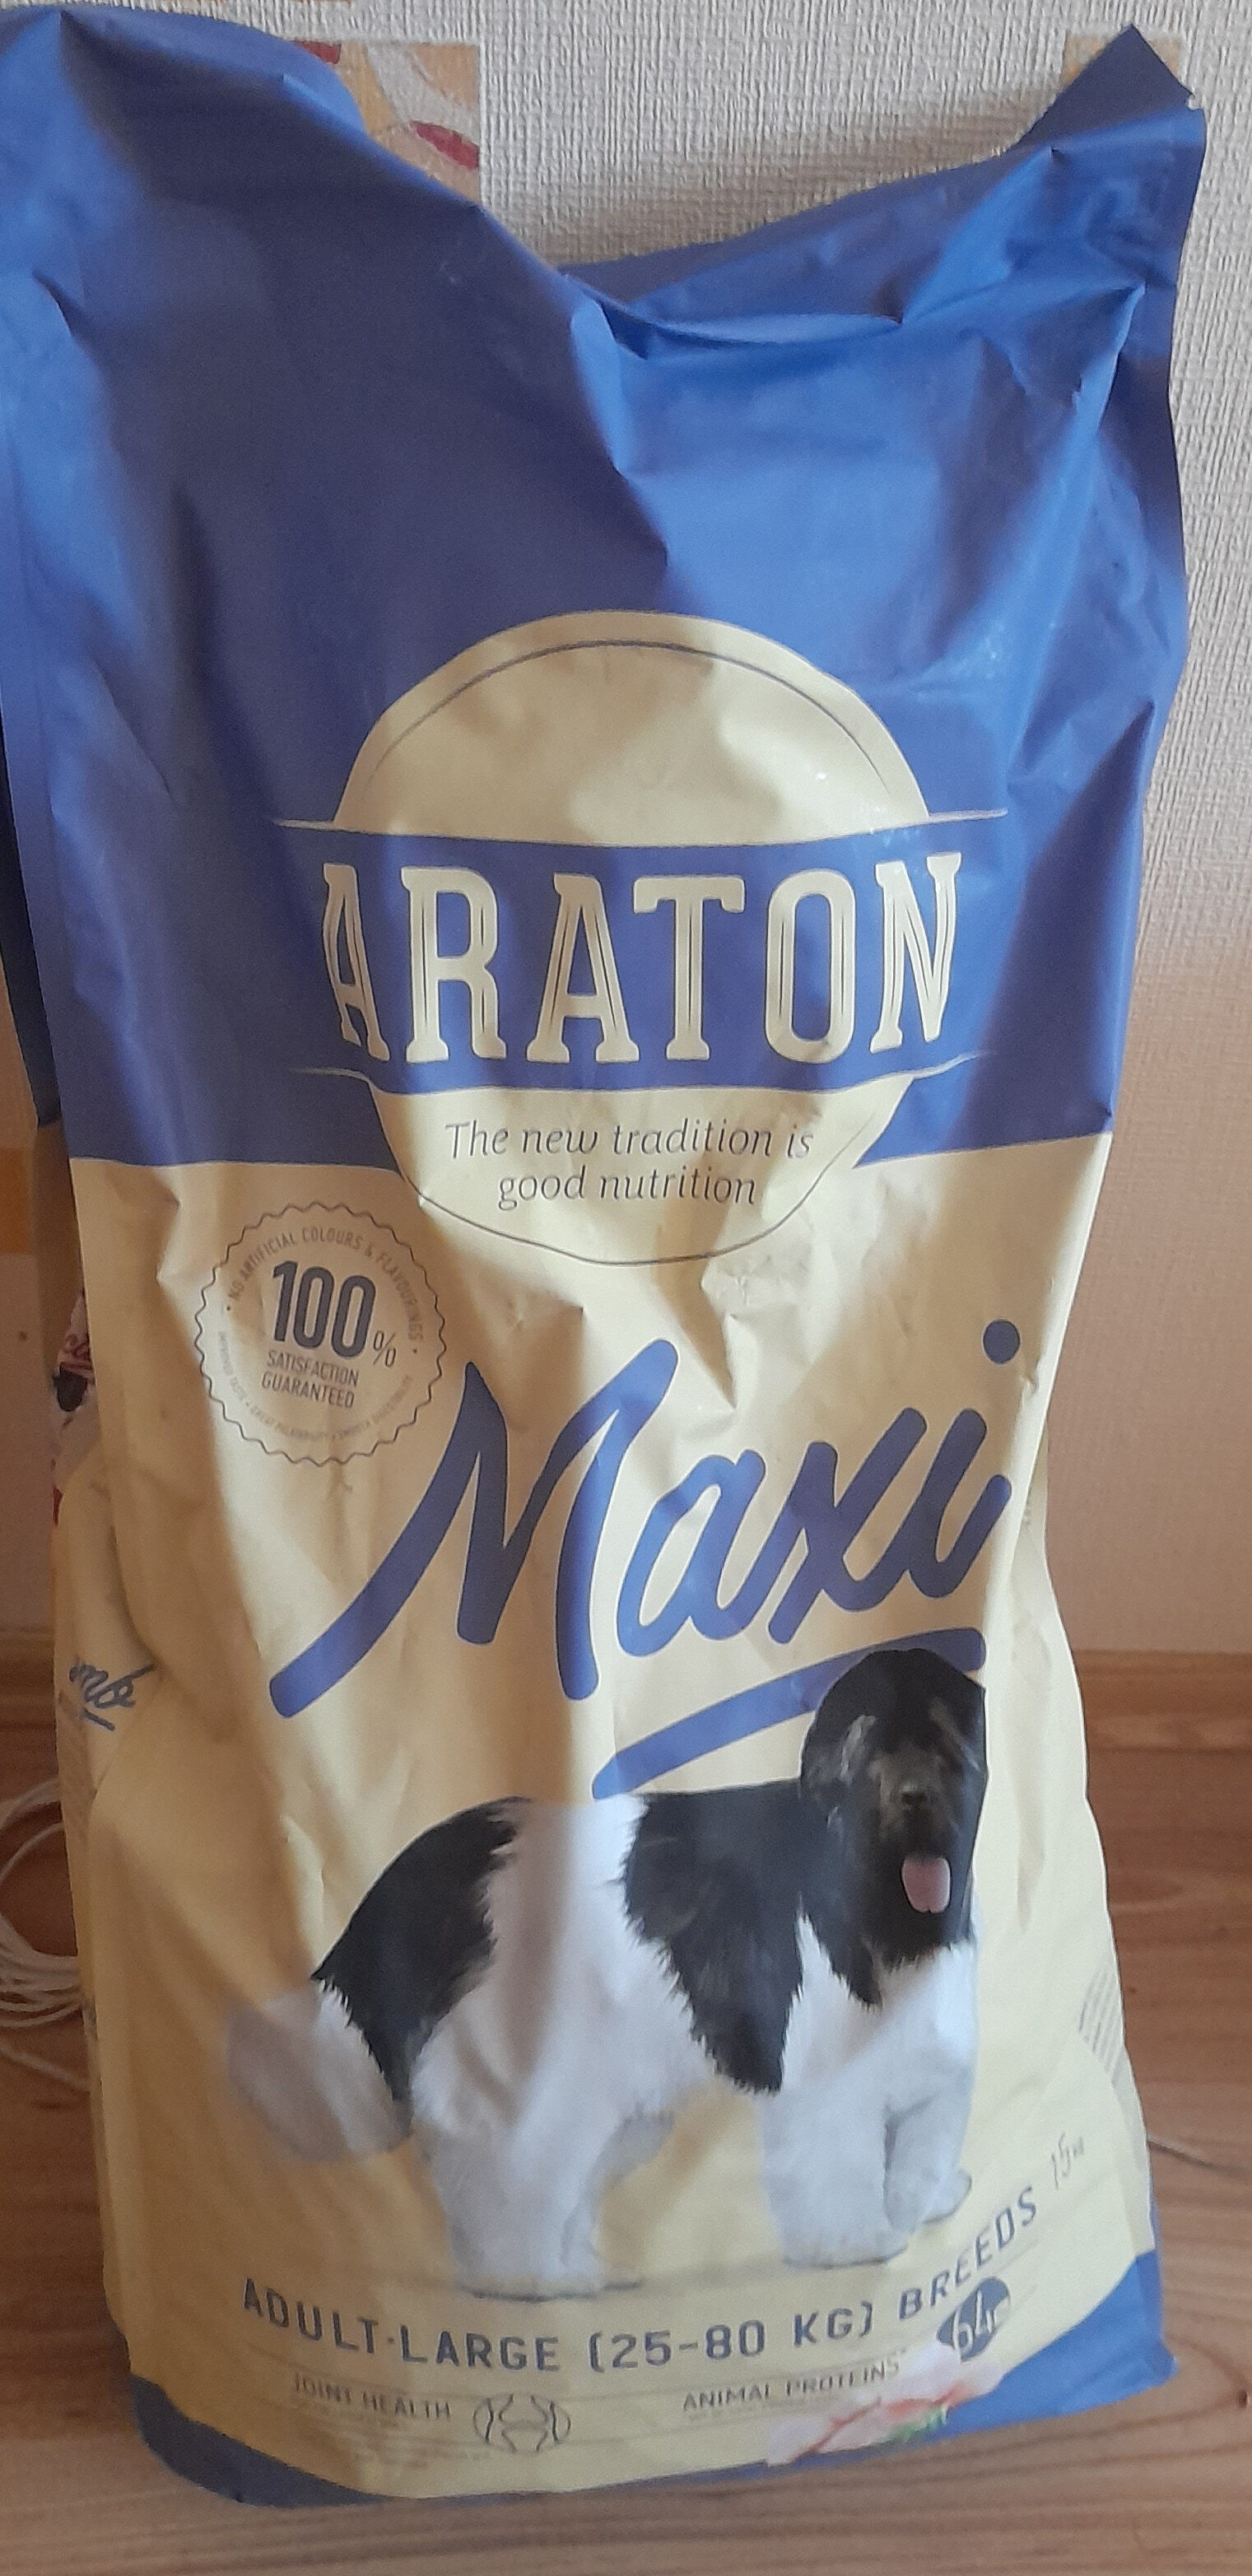 Araton maxi - Product - lt